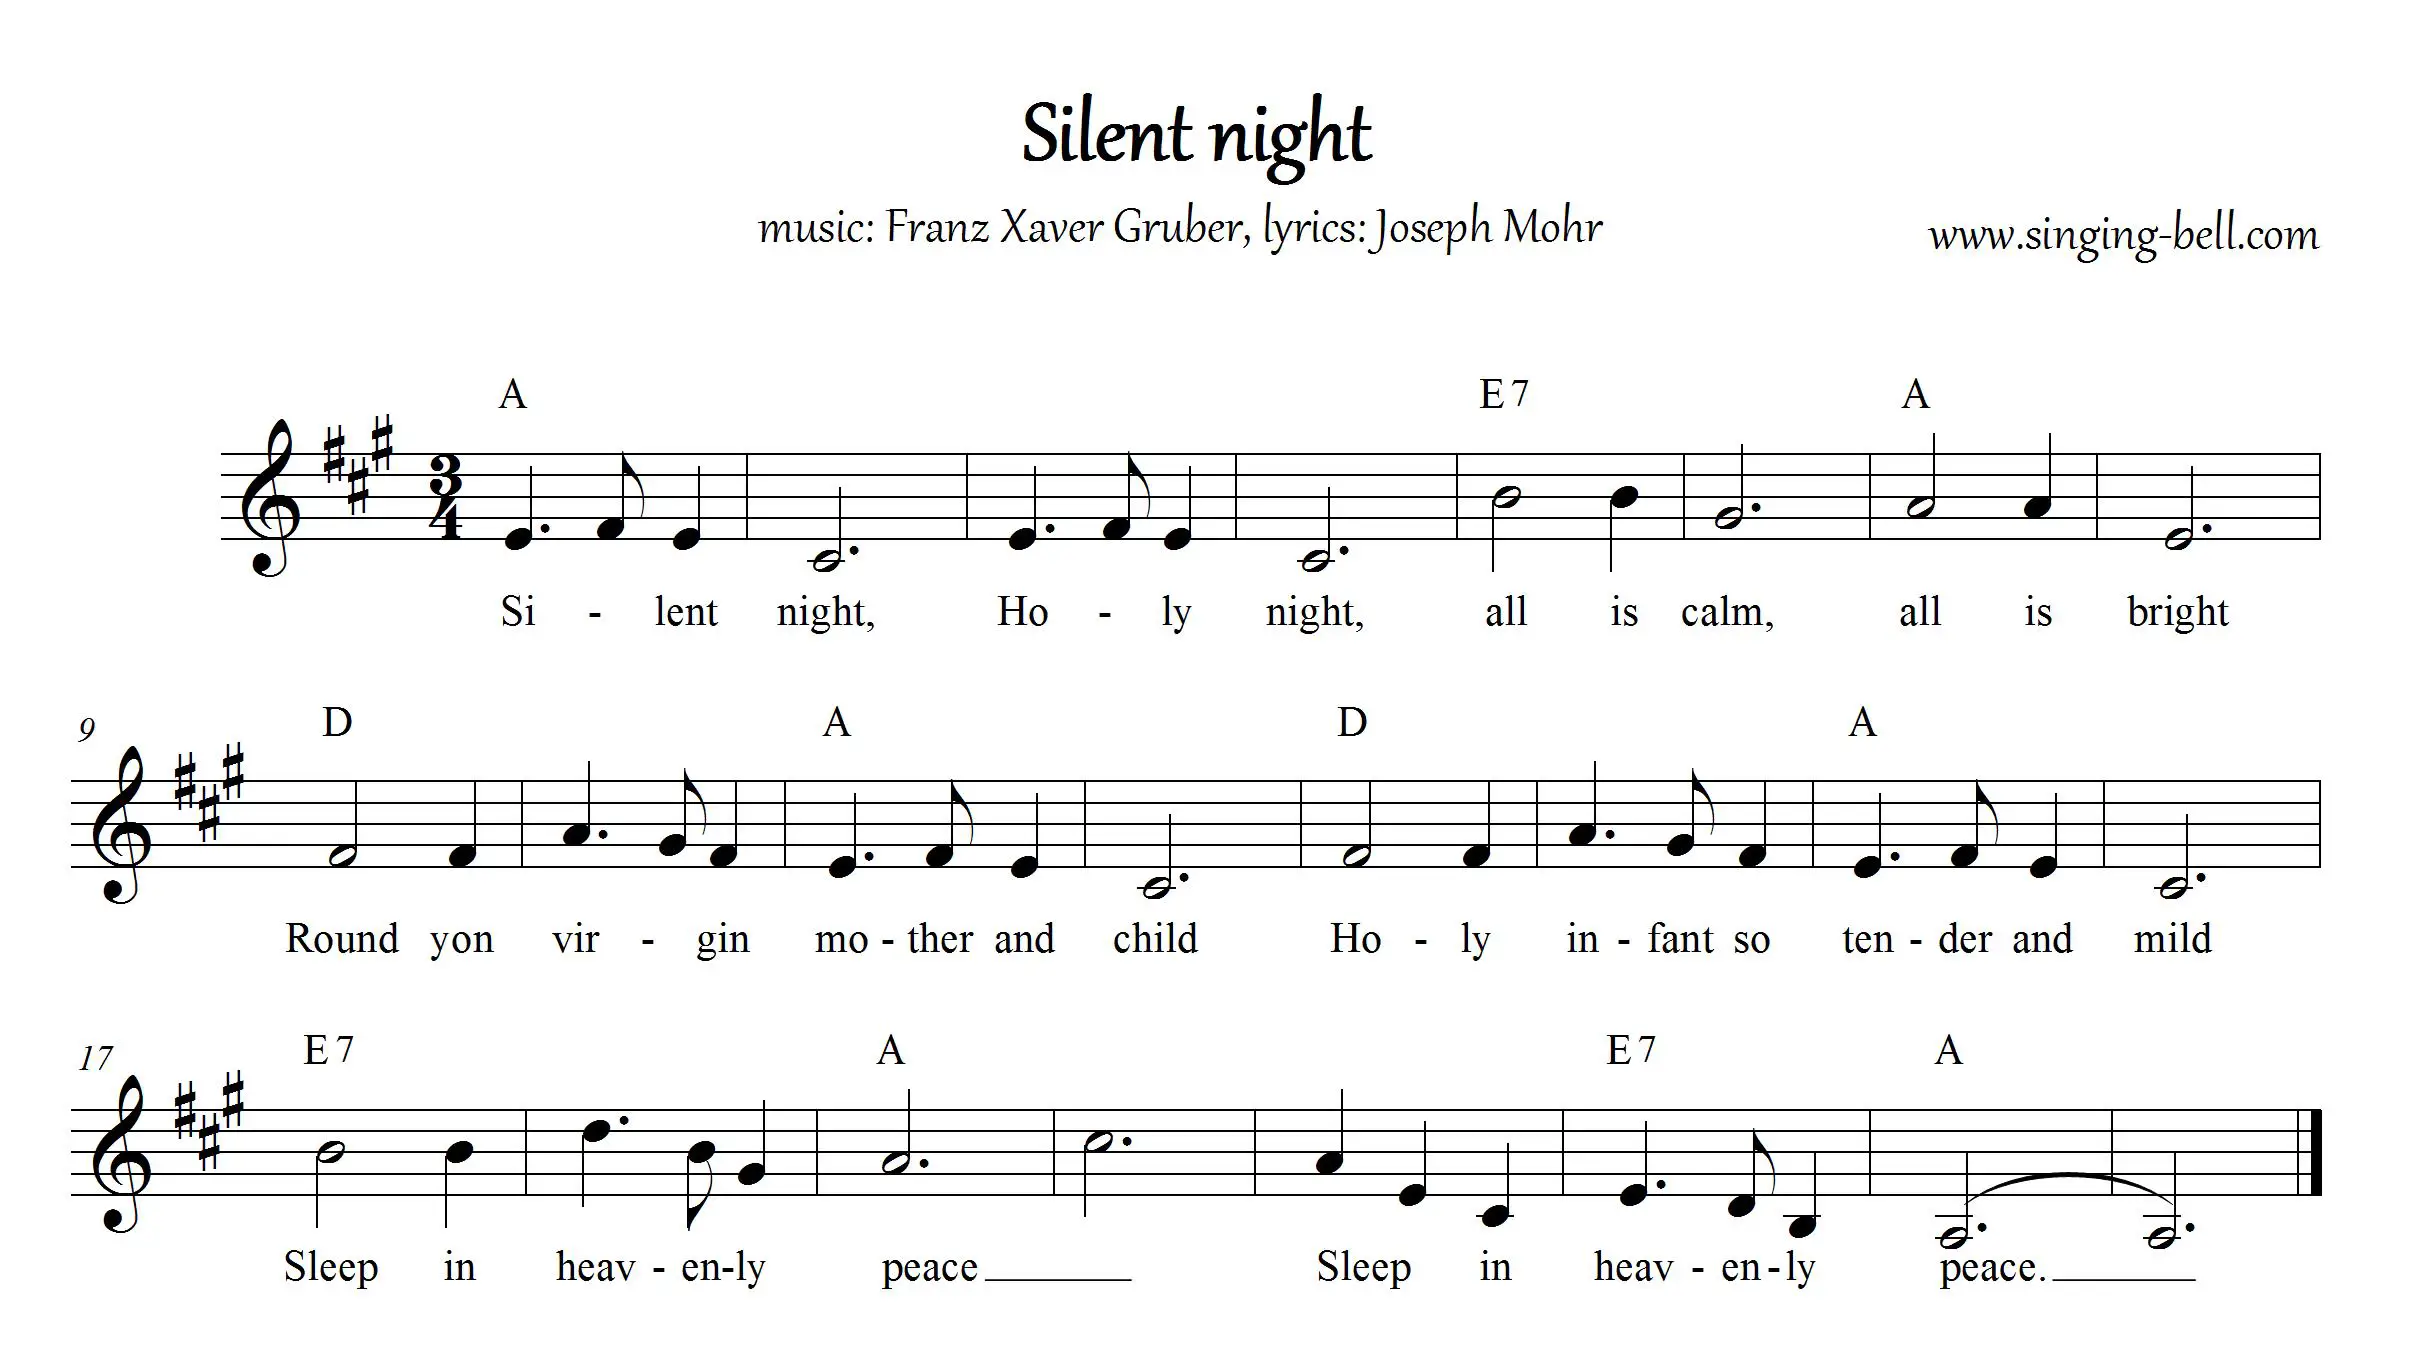 Free Christmas Carols > Silent night - free mp3 audio song download